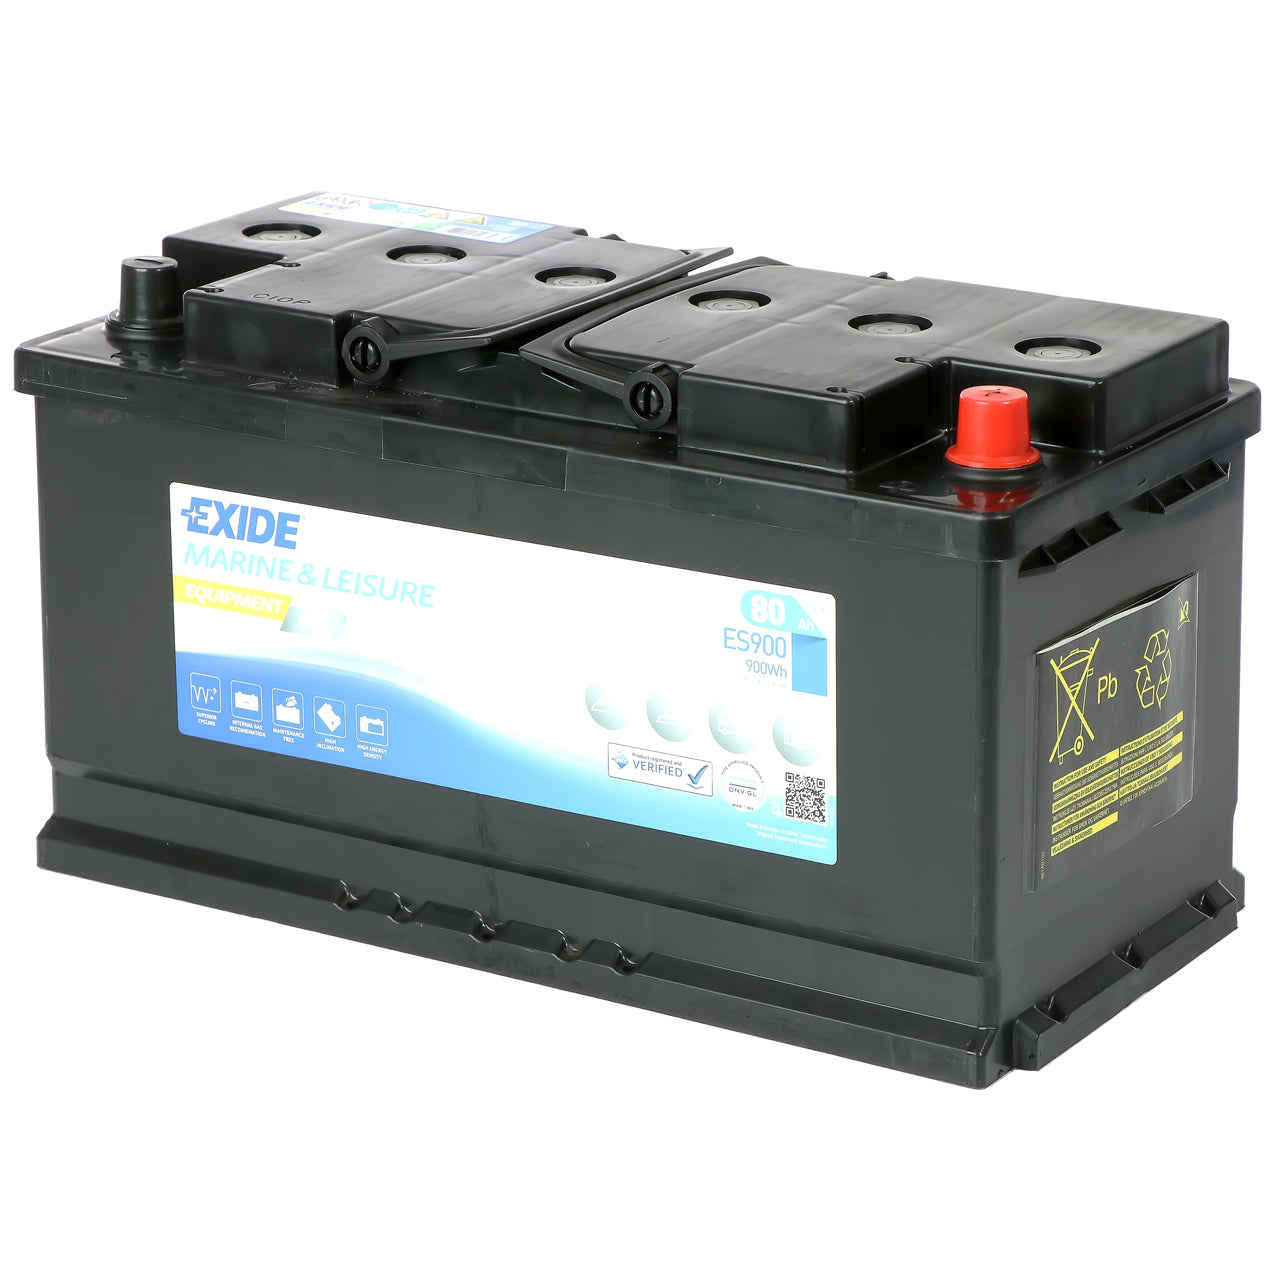 Exide ES900 Equipement Gel Batterie 80Ah / 540A, 165,90 €